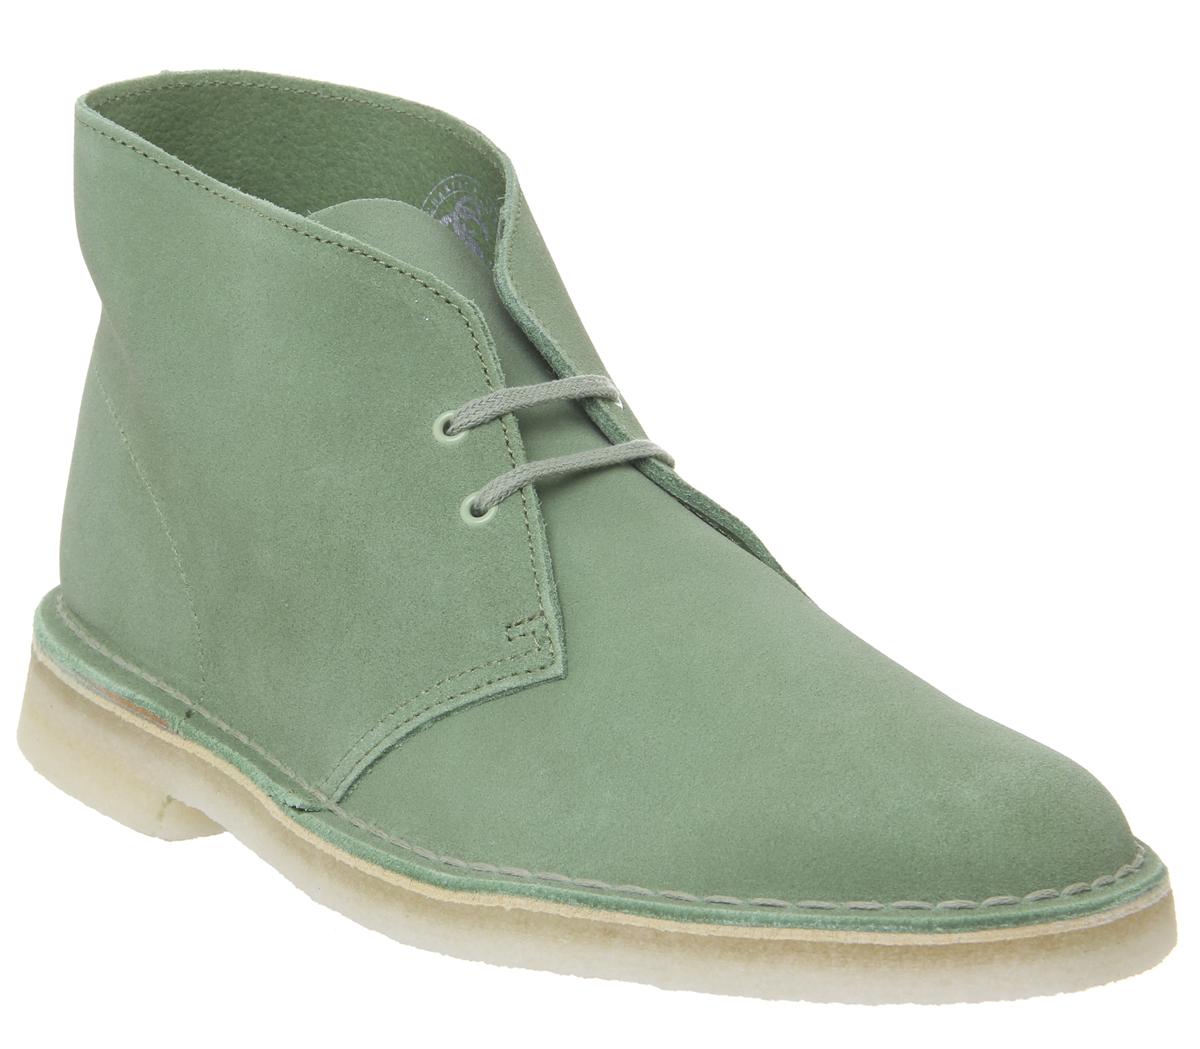 clarks desert boots green suede